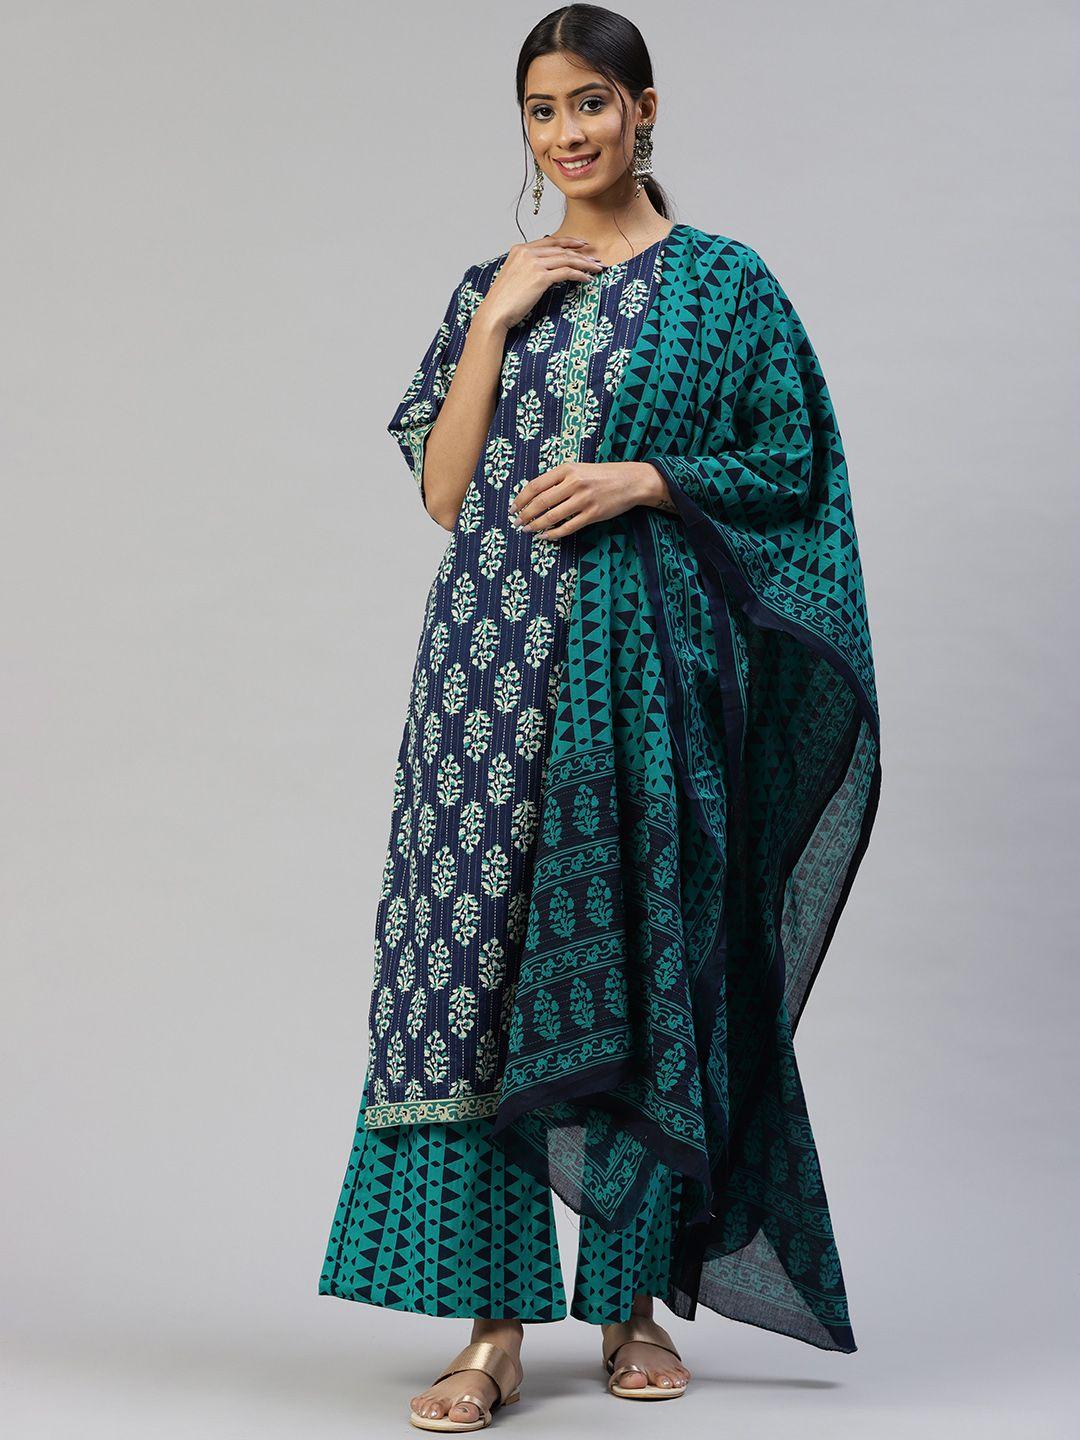 svarchi-women-blue-pure-cotton-ethnic-motifs-printed-kurta-with-palazzos-&-with-dupatta